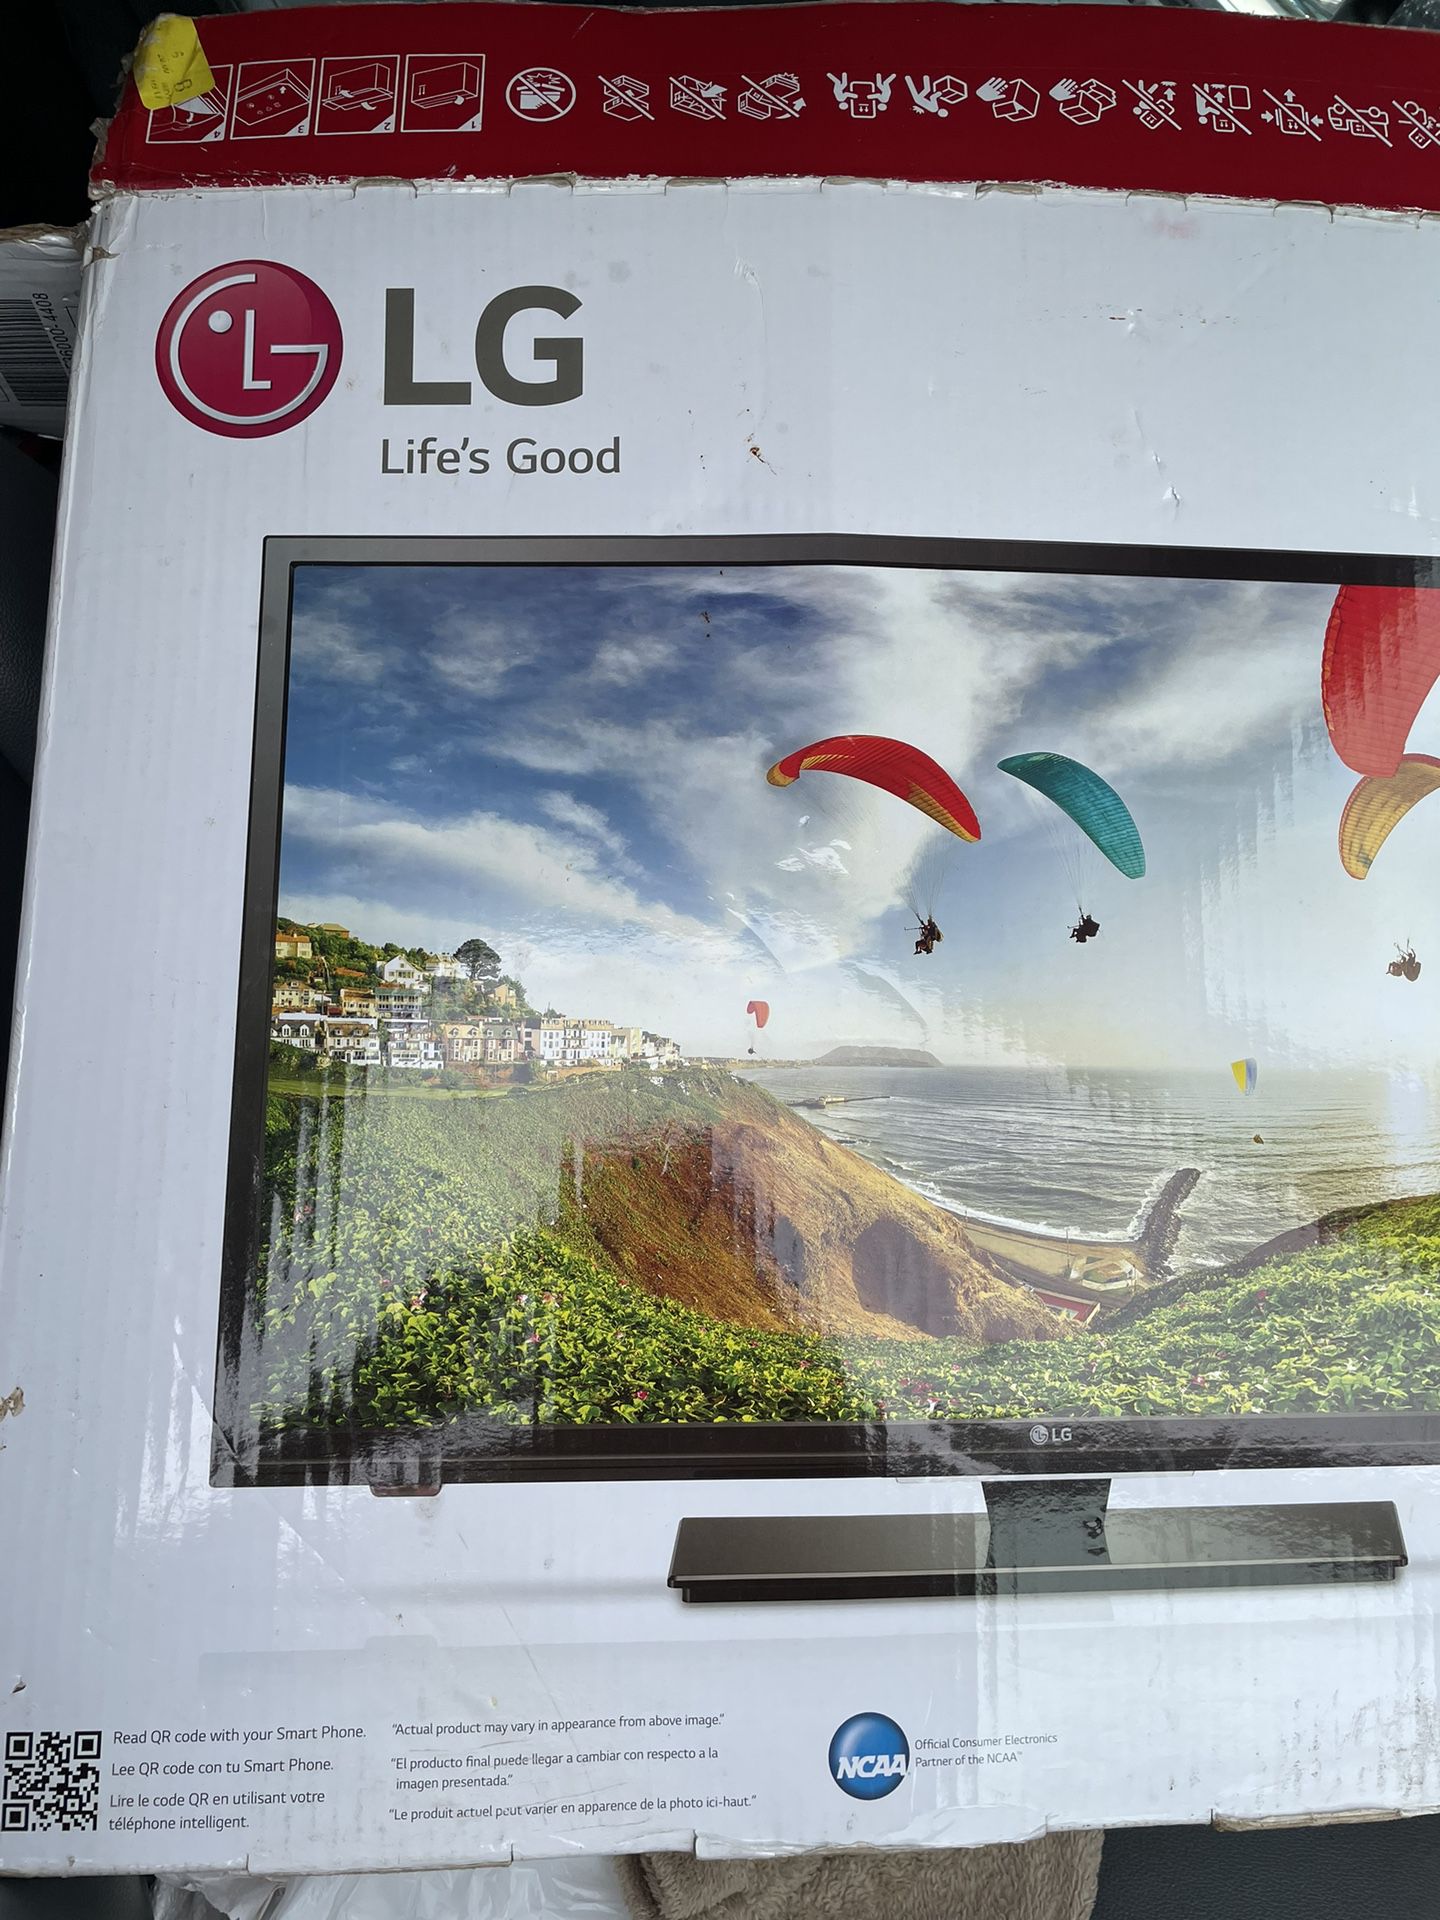 32” Inch LG LED Tv